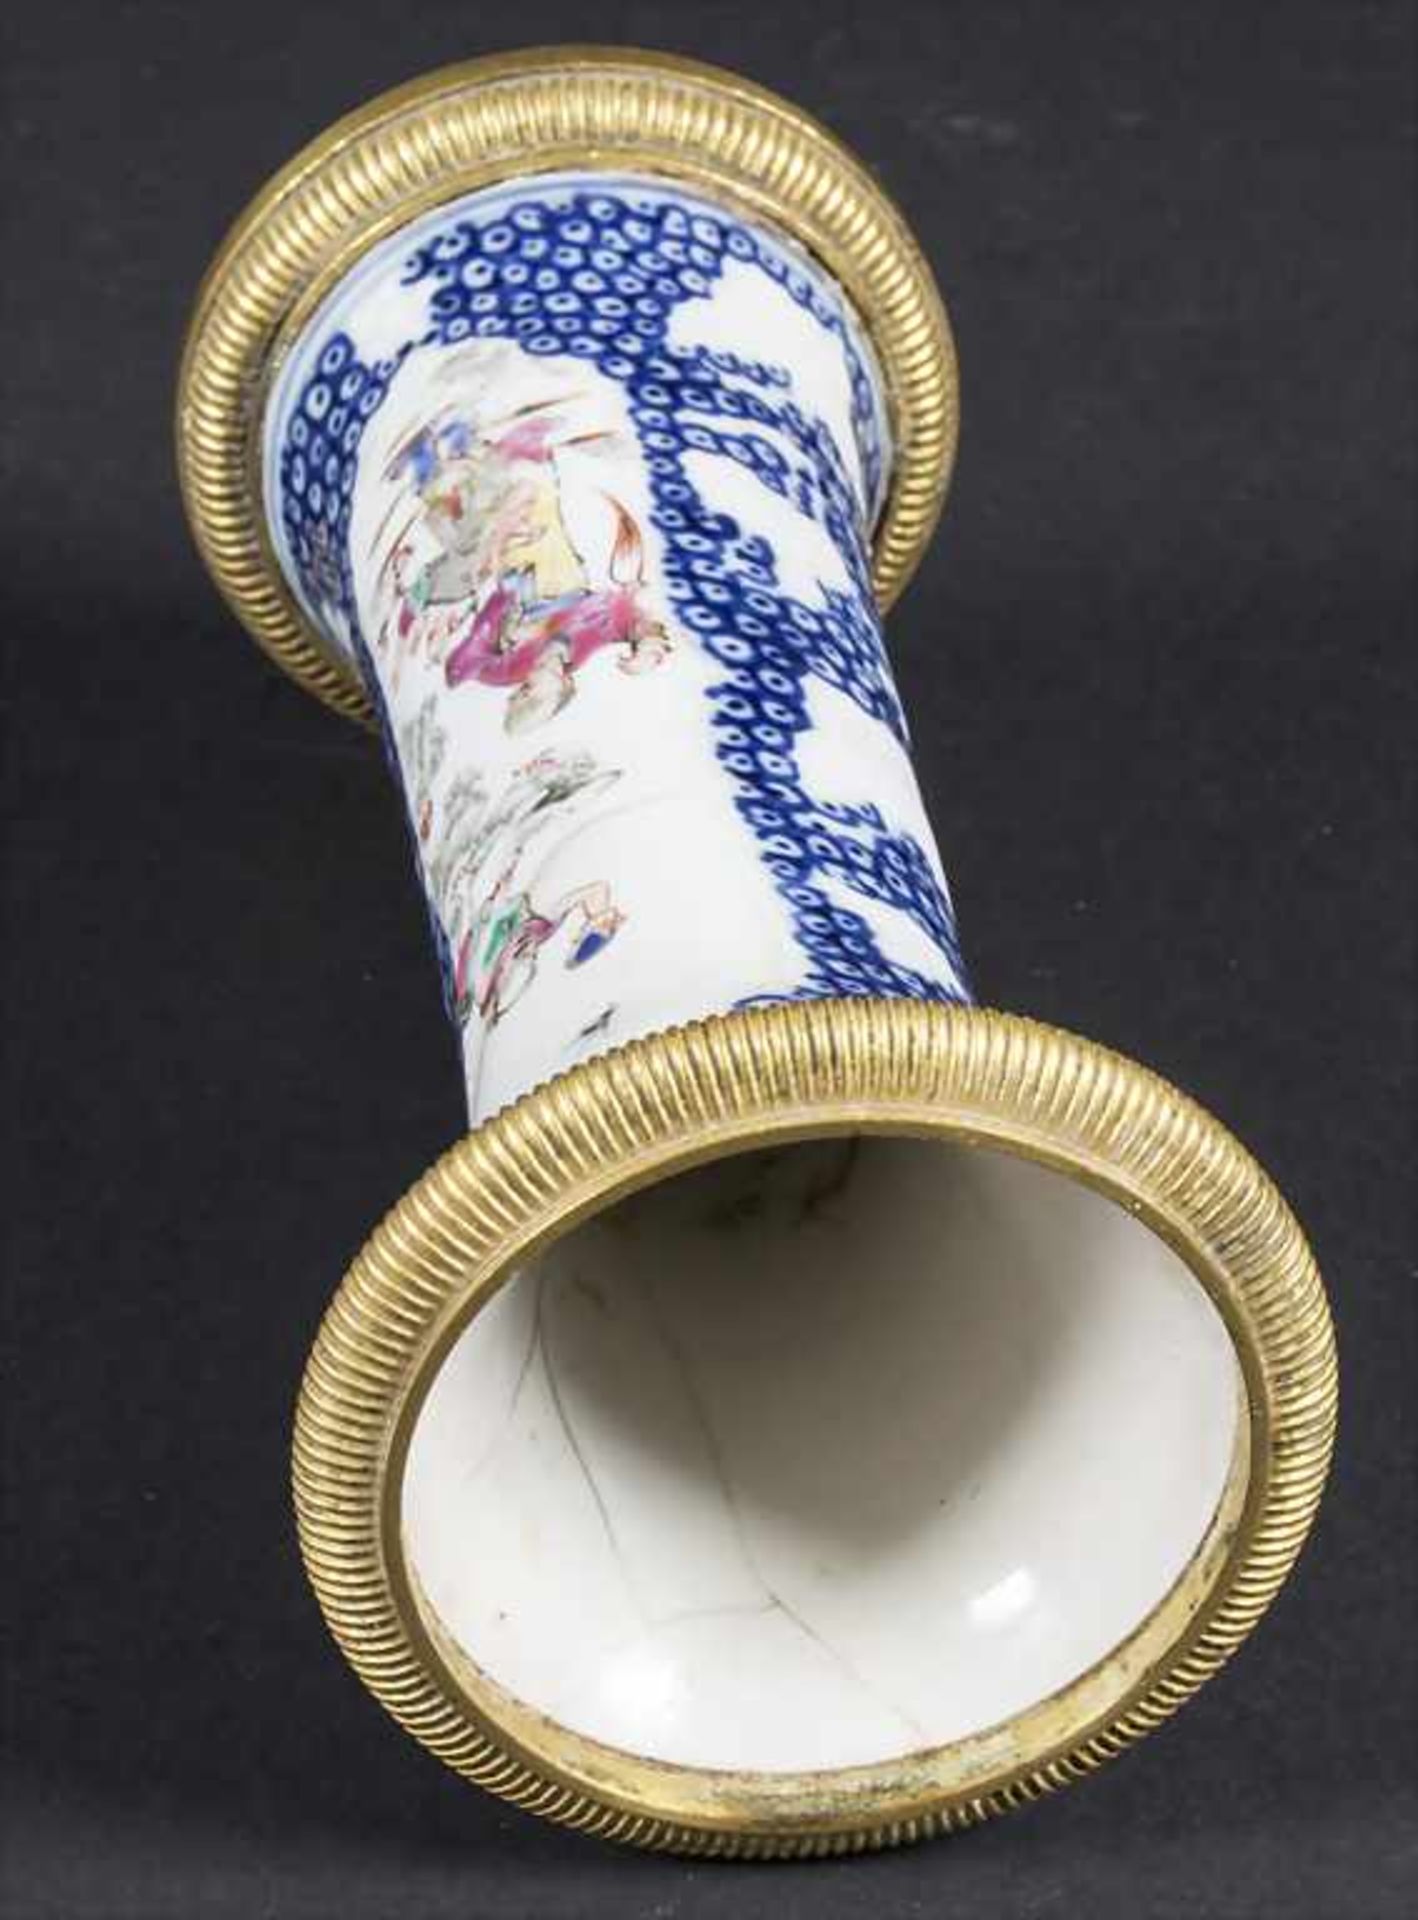 Ziervase / A decorative porcelain vase, China, Qing Dynastie (1644-1911), 18. Jh. - Image 5 of 9